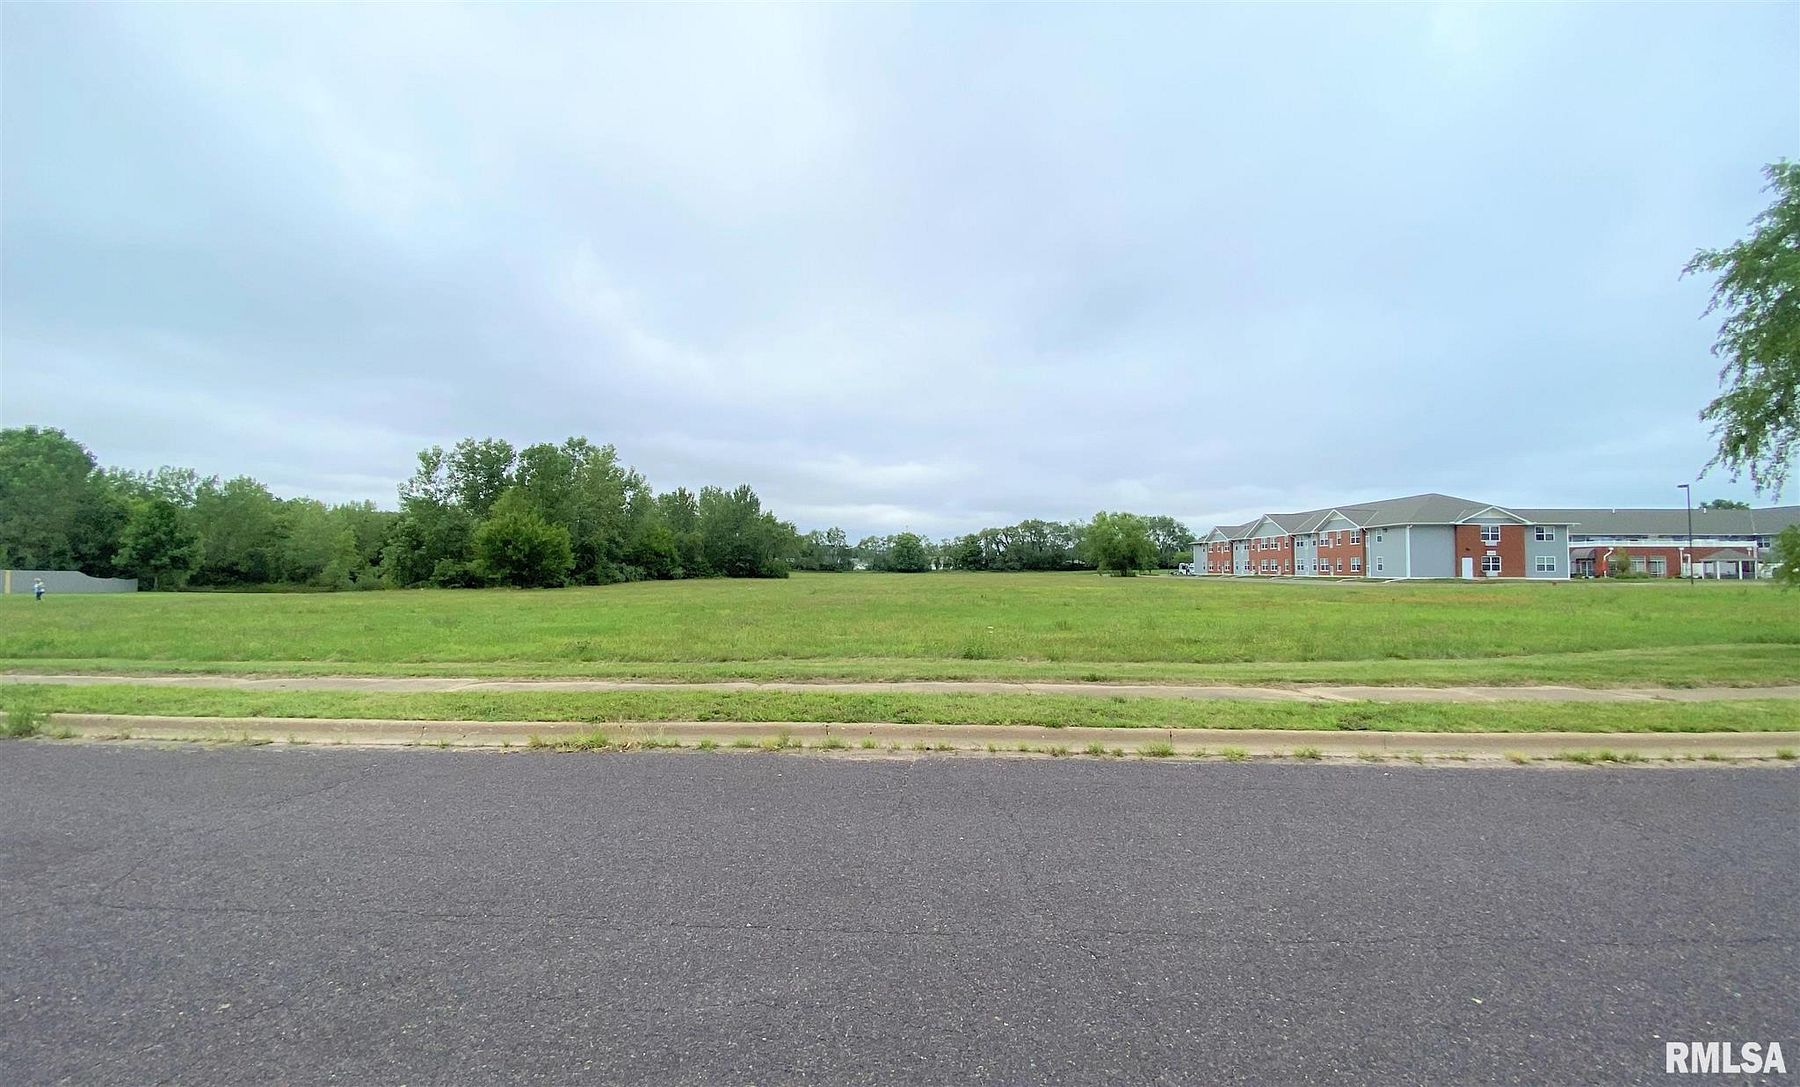 1 Acre of Commercial Land Pekin, Illinois, IL